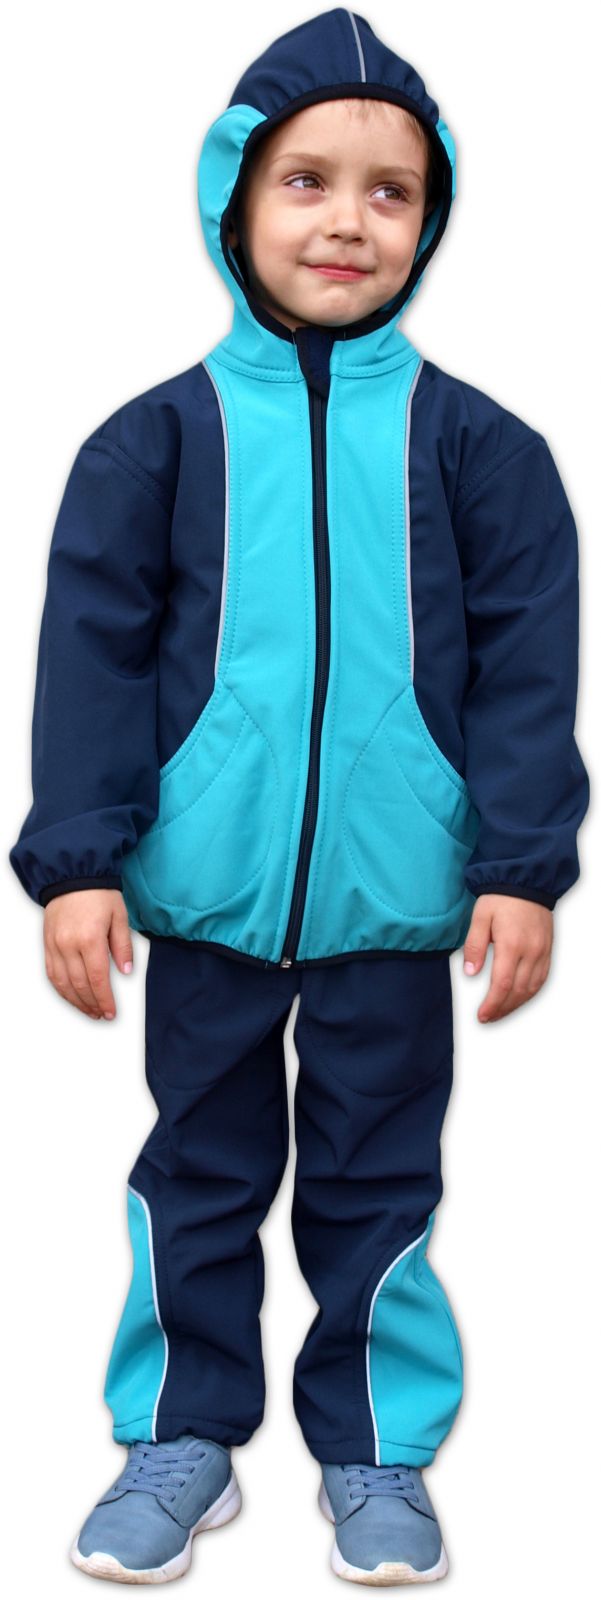 Softshell Jacke für Kinder, dunkel blau/türkis, Gr. 134/140